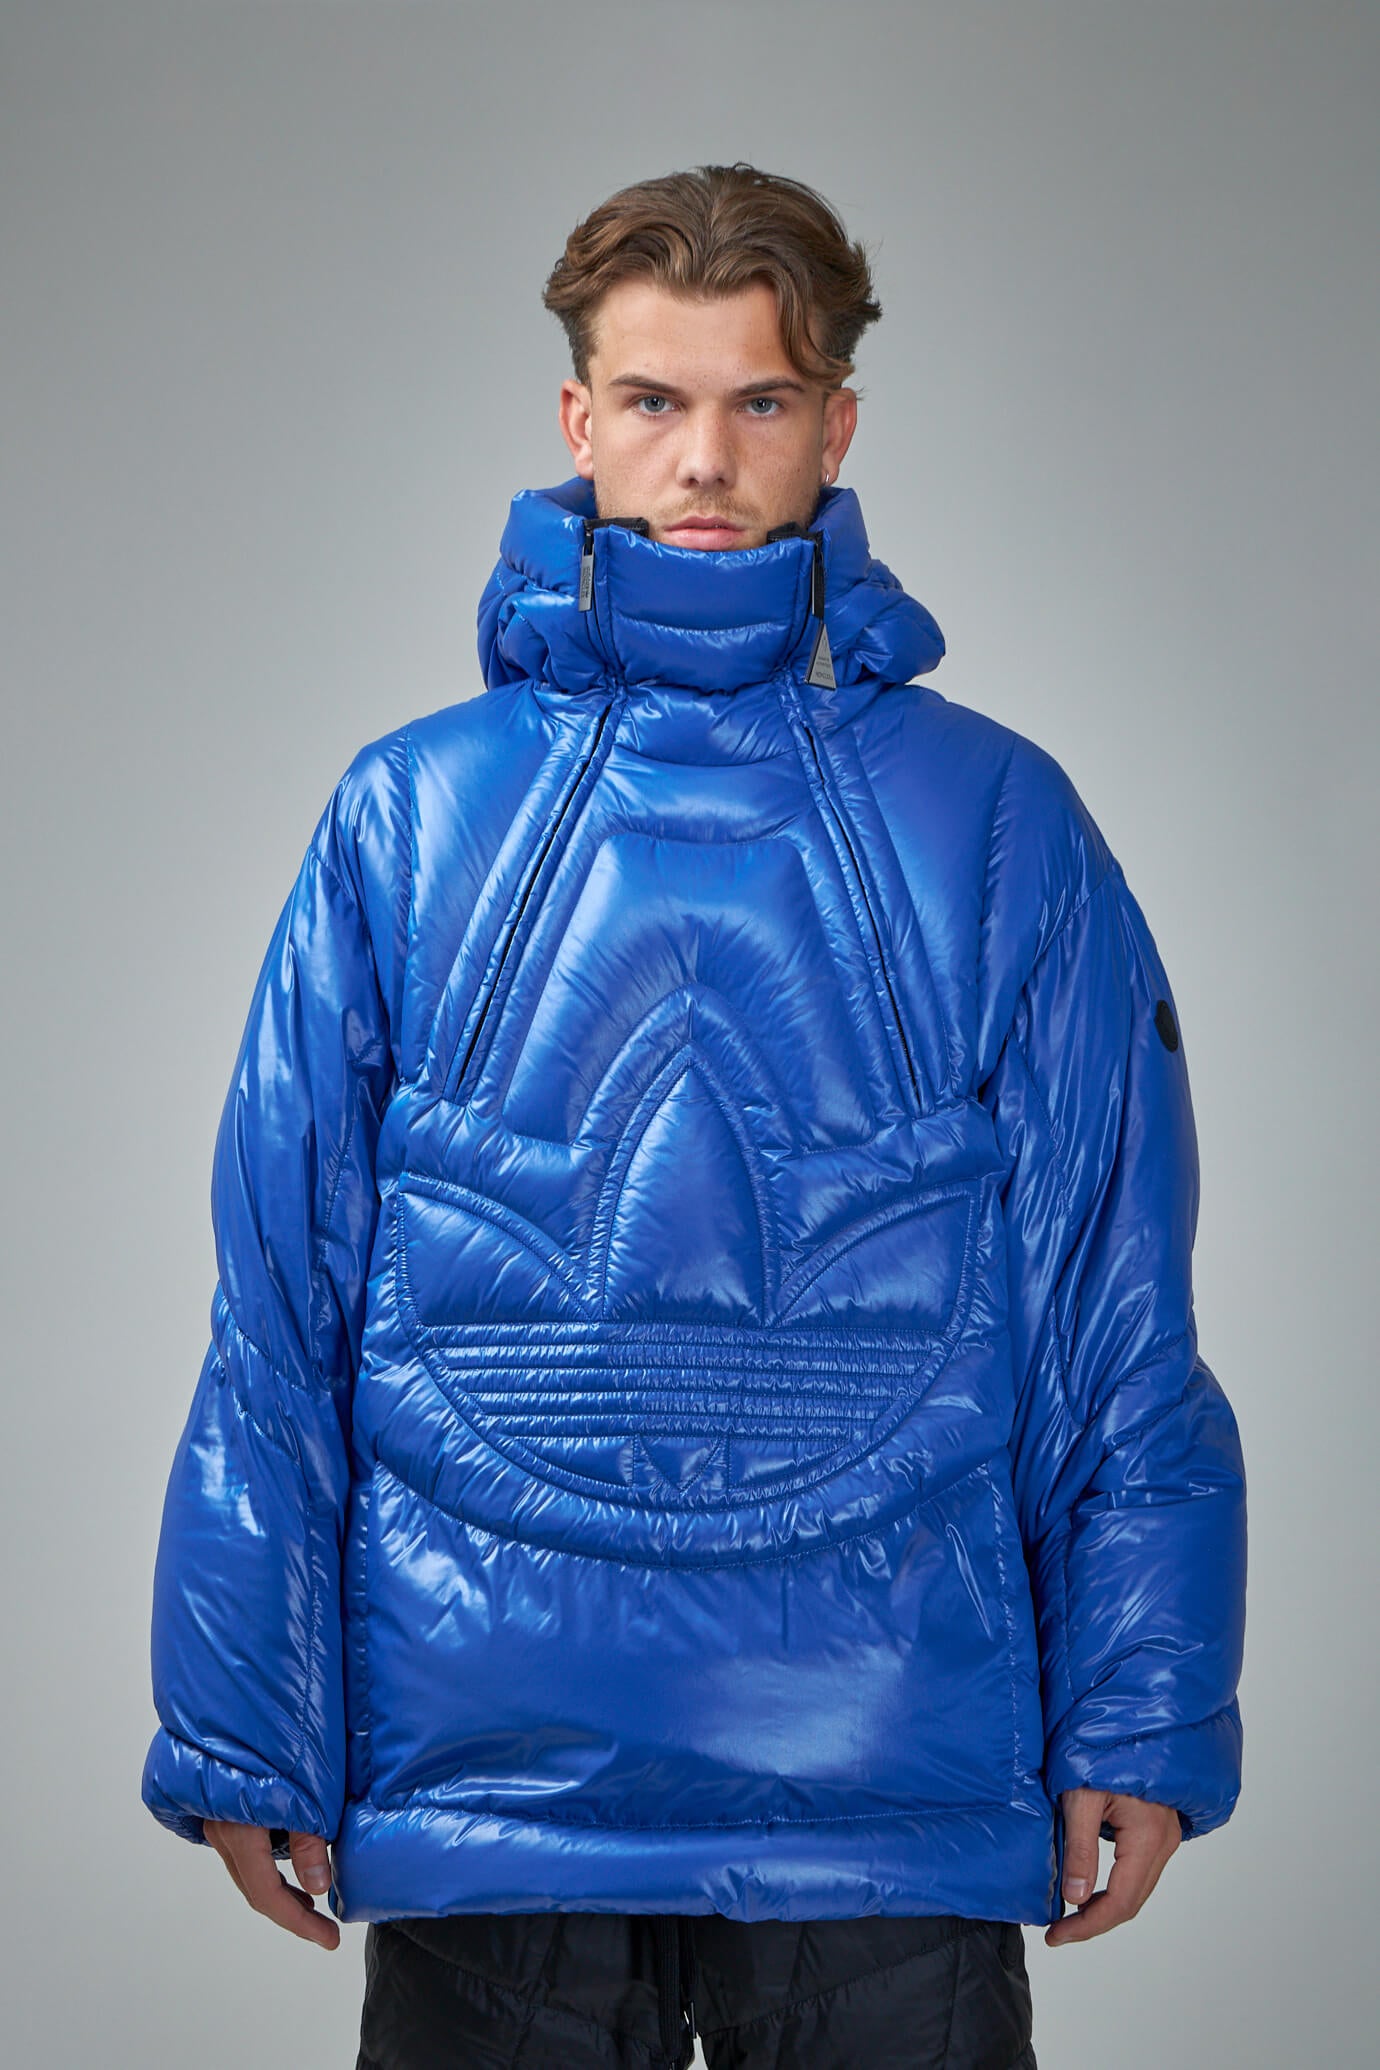 Moncler x Adidas Originals Chambery Down Jacket